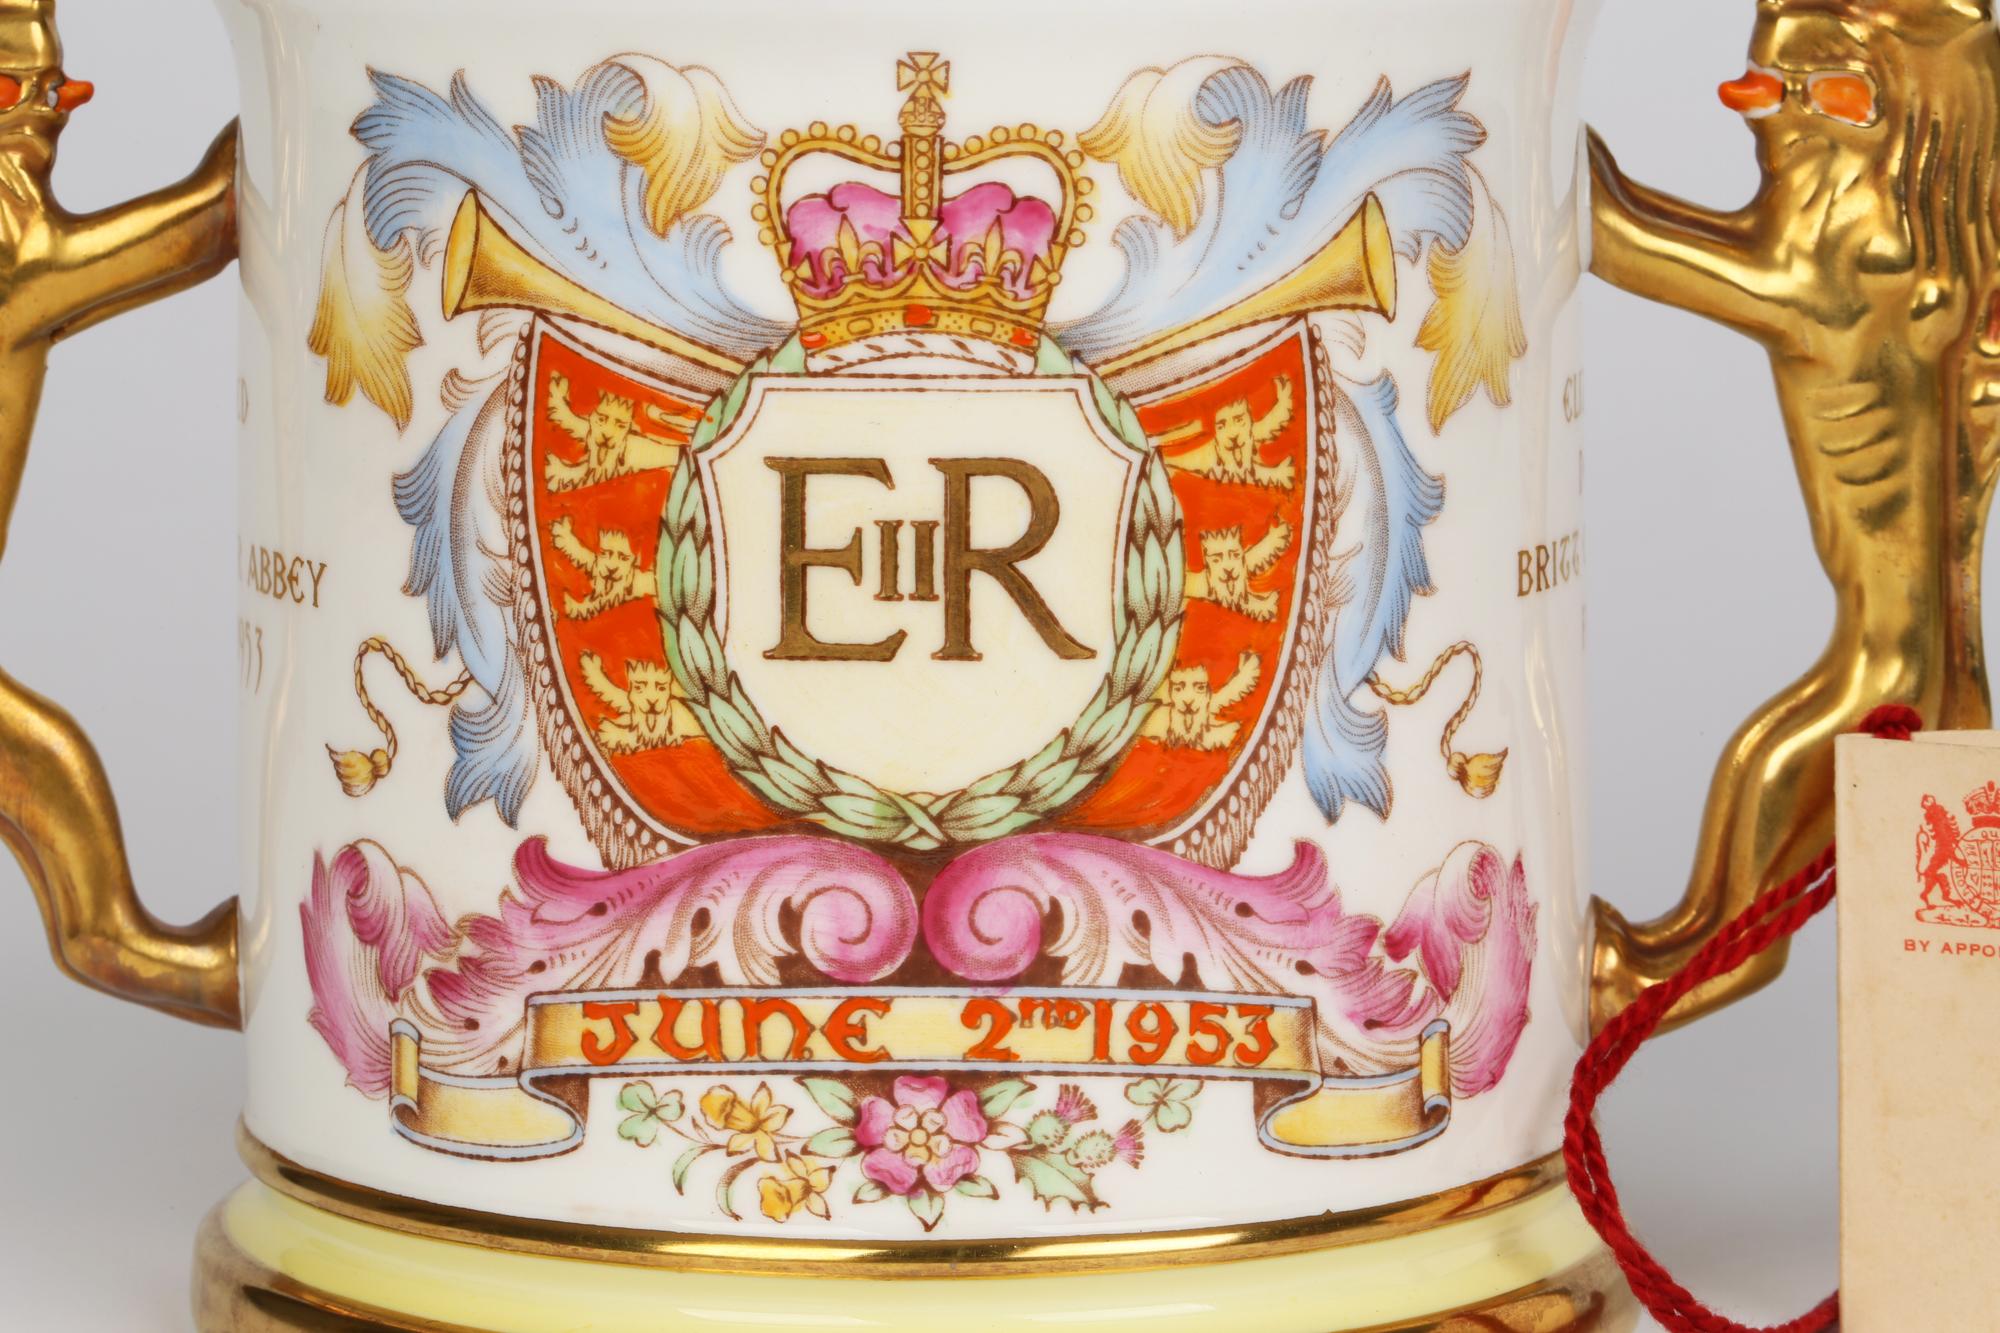 Paragon Ltd Edn Porcelain Tyg Commemorating Coronation of Queen Elizabeth II 195 3